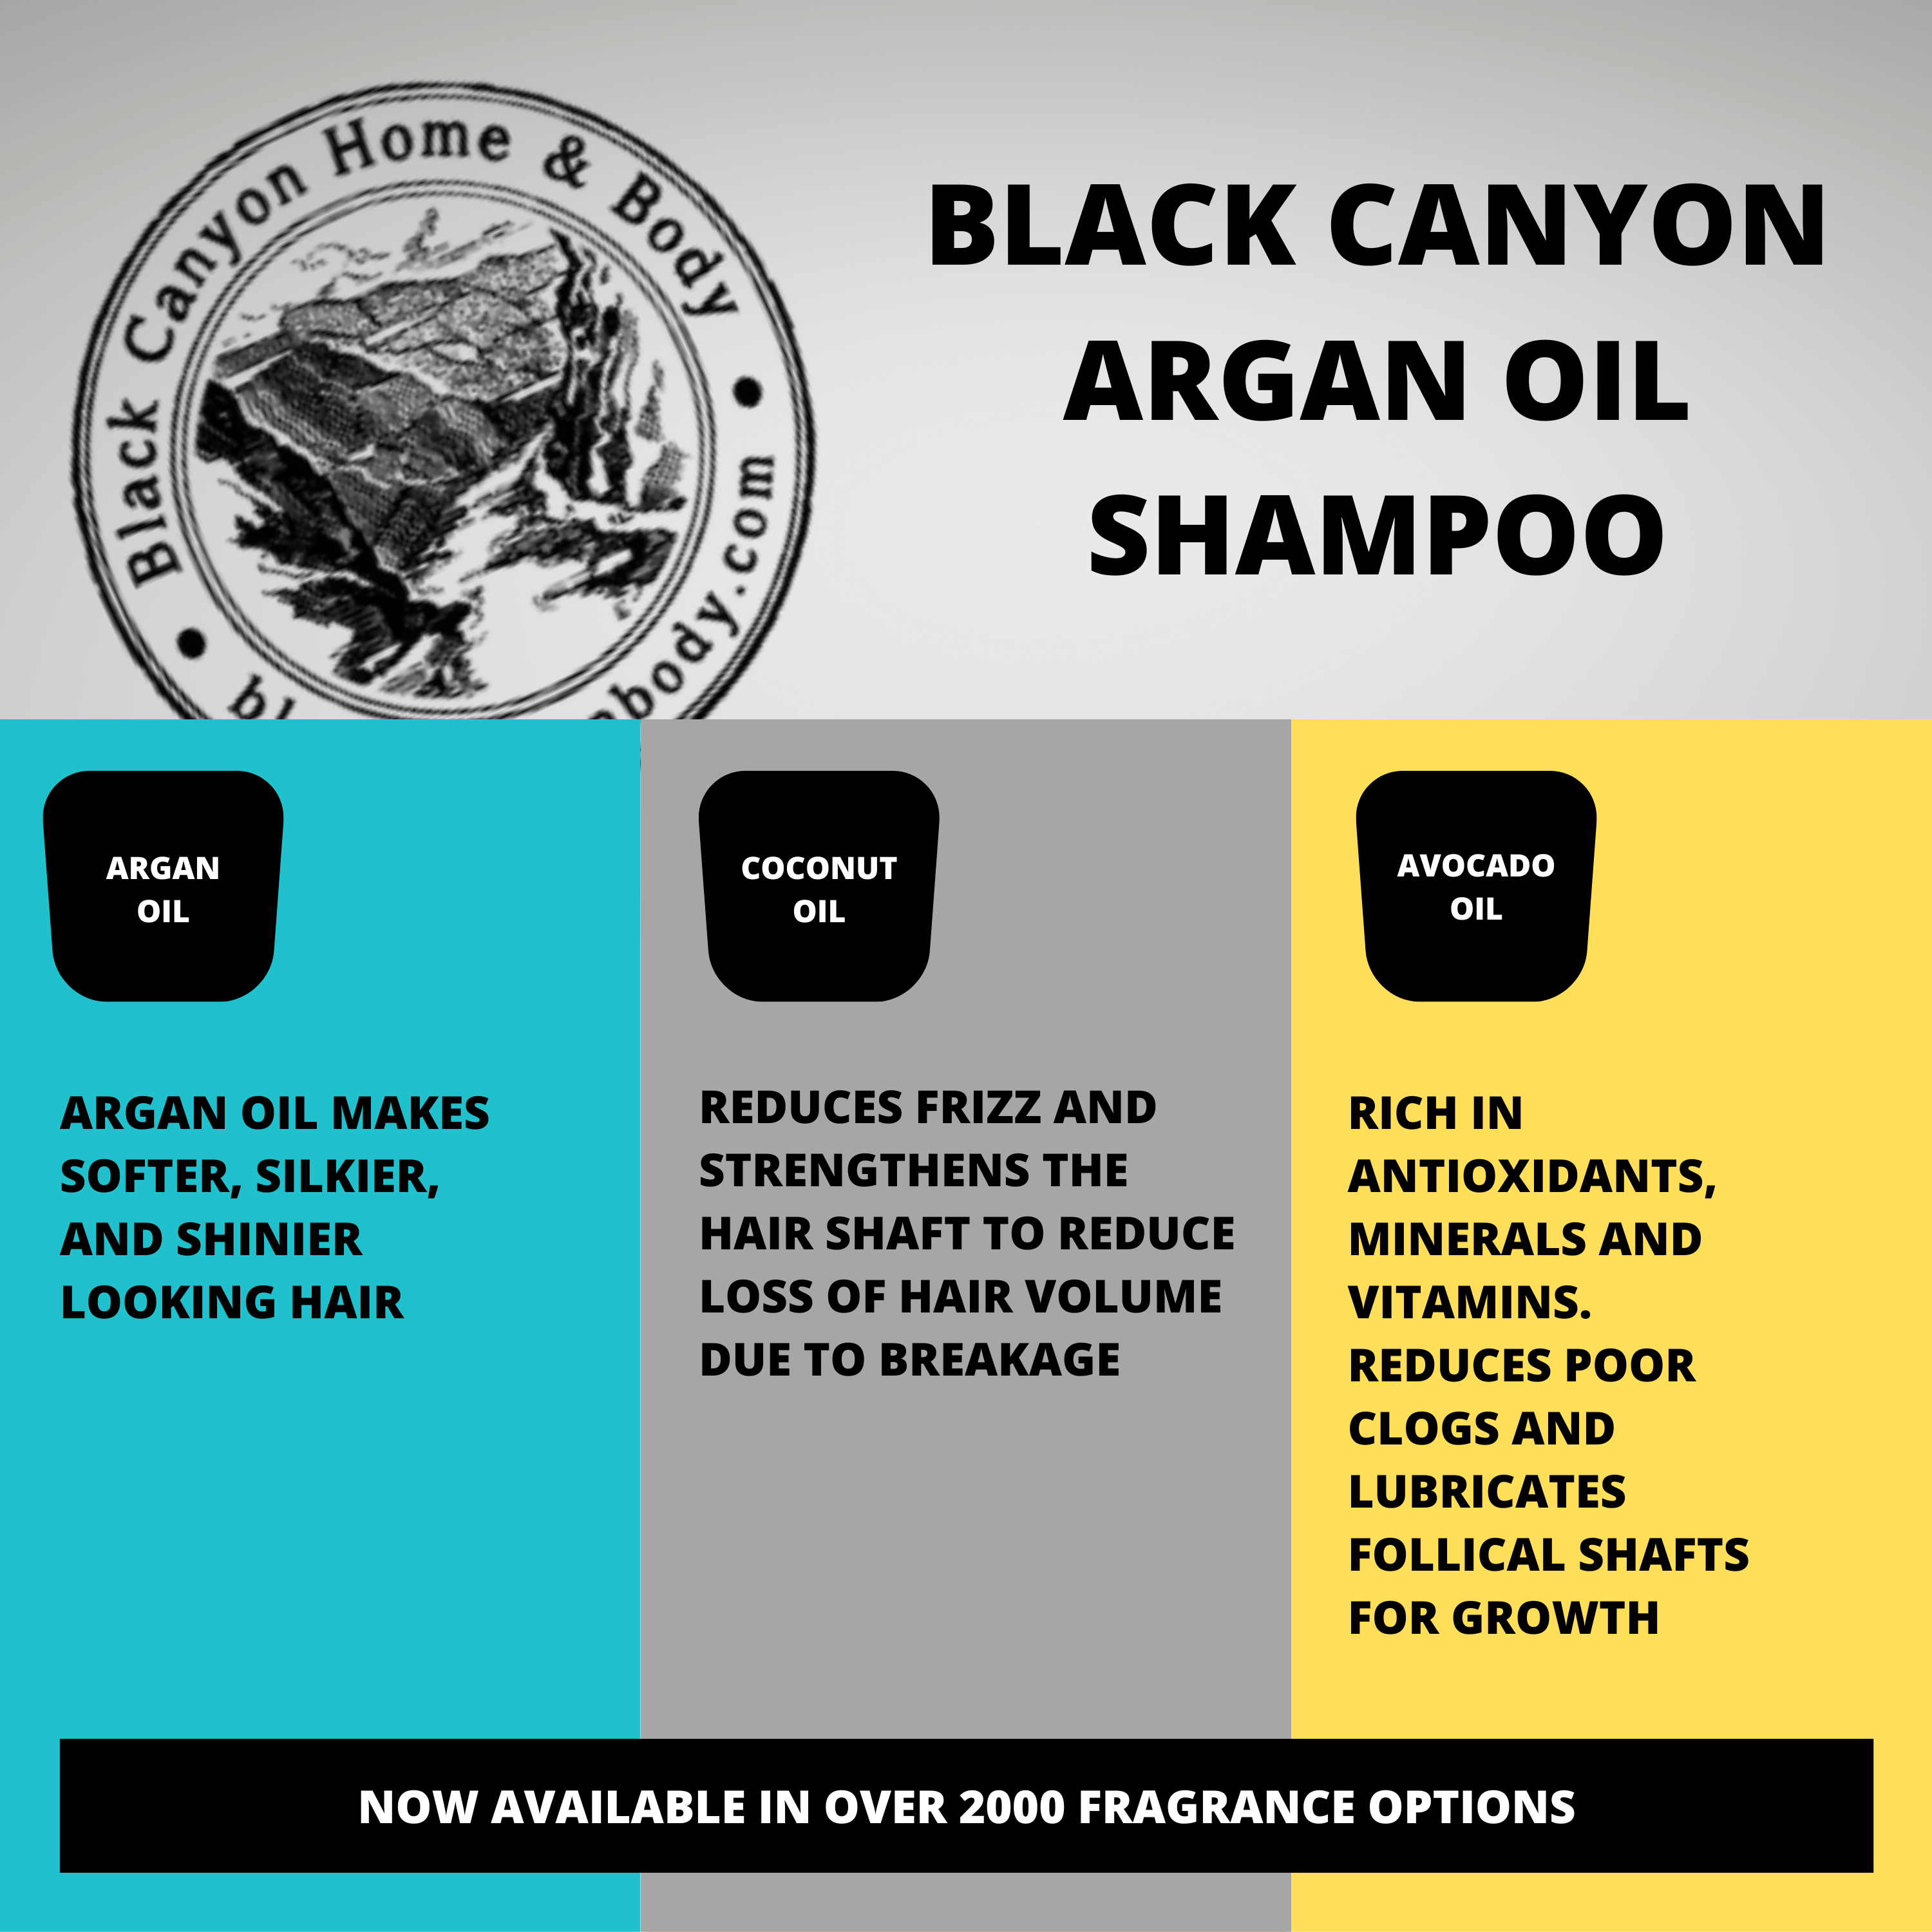 Black Canyon Lemon & Hyacinth Scented Shampoo with Argan Oil